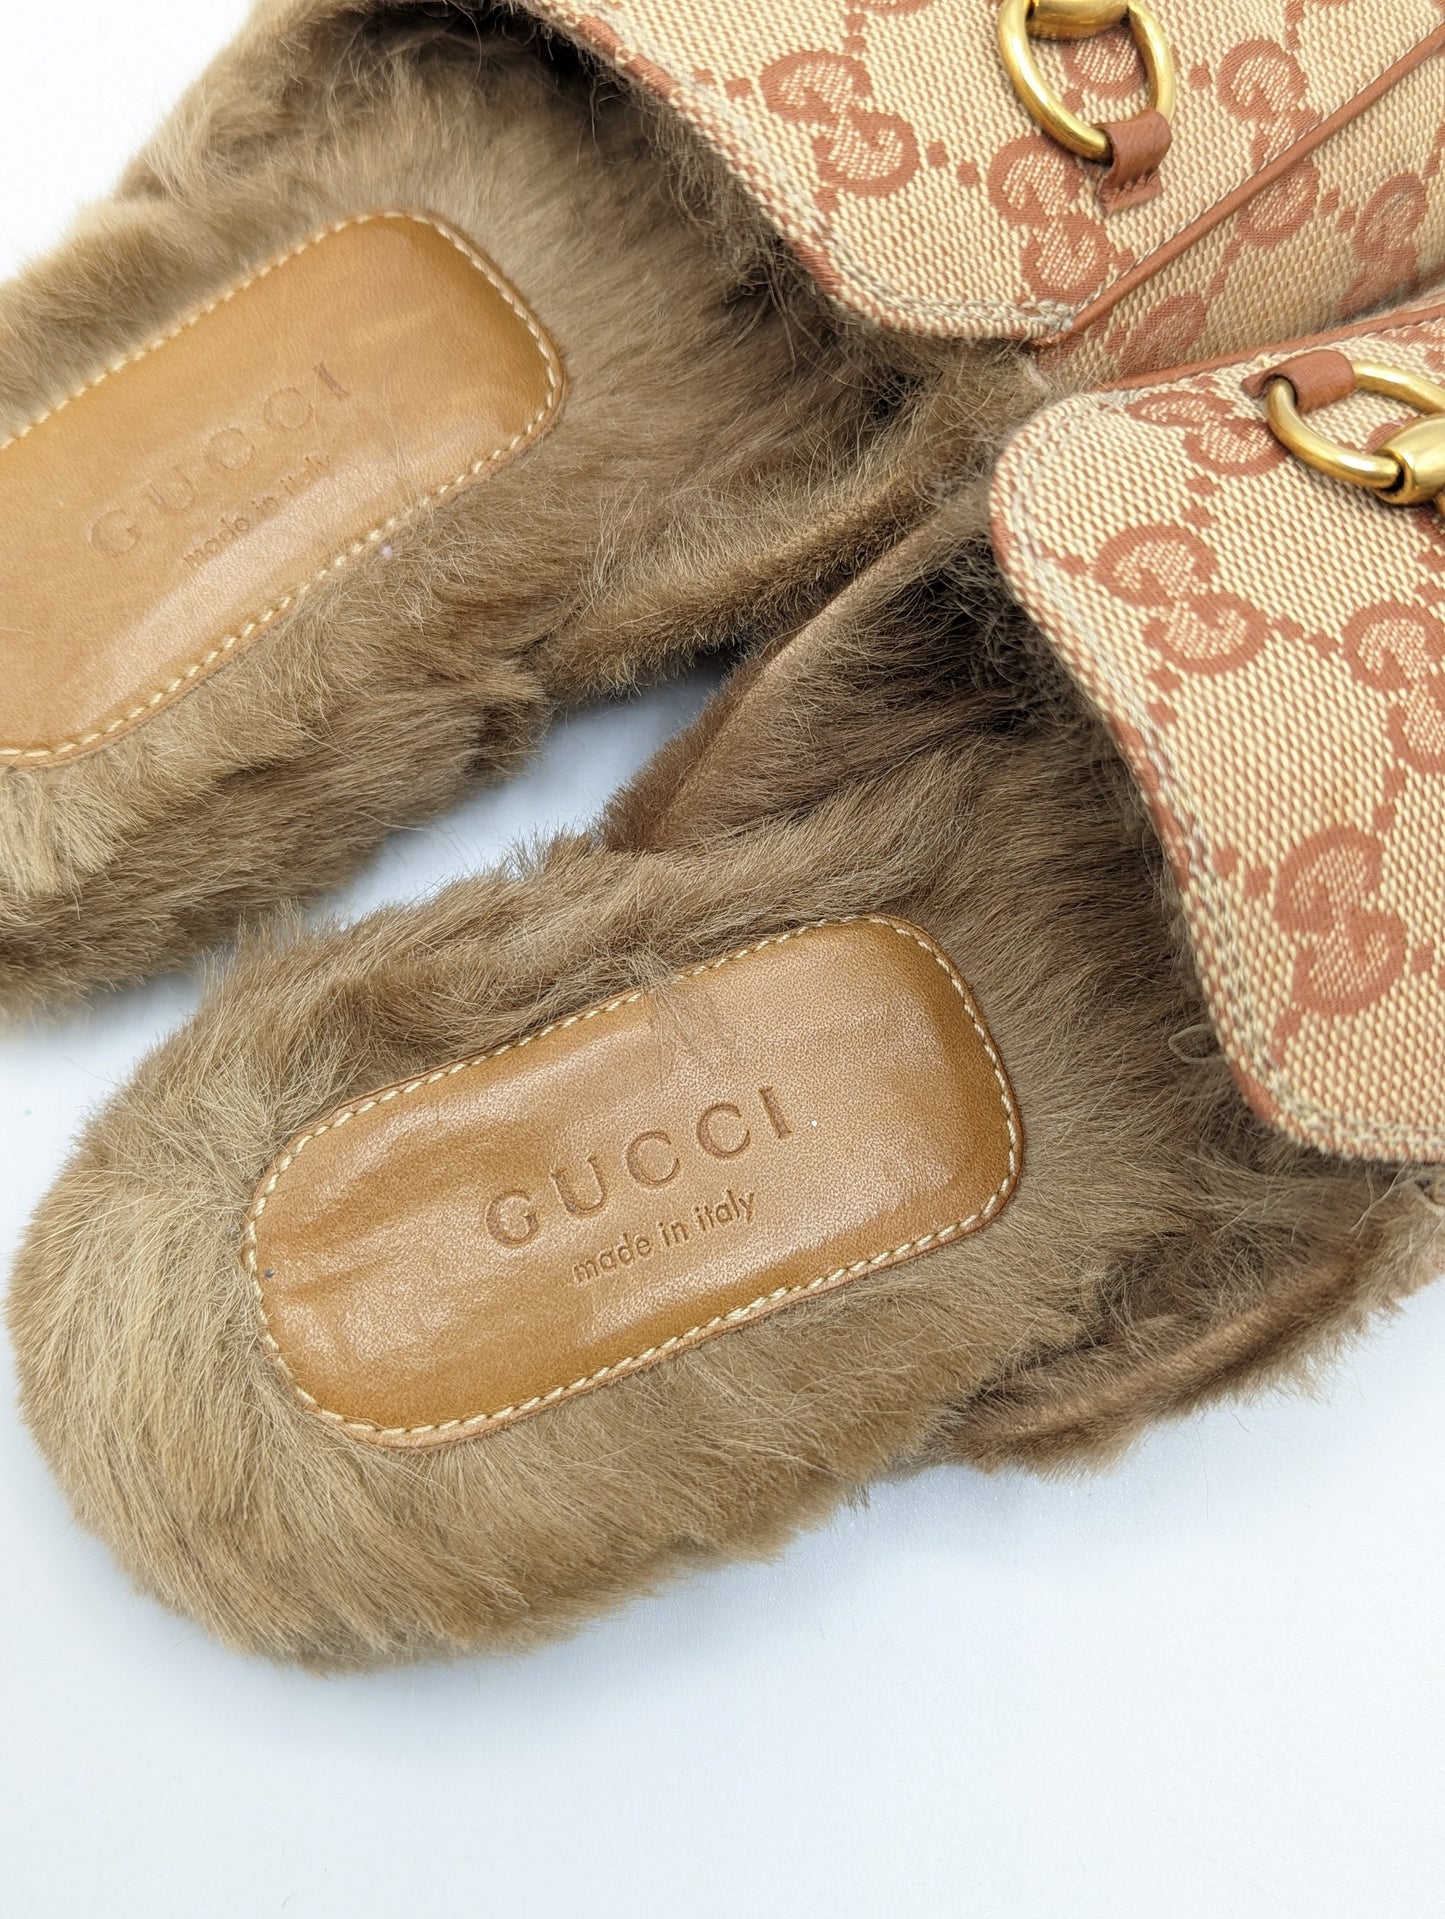 Gucci Monogram Fur Princetown Mules Size 37.5